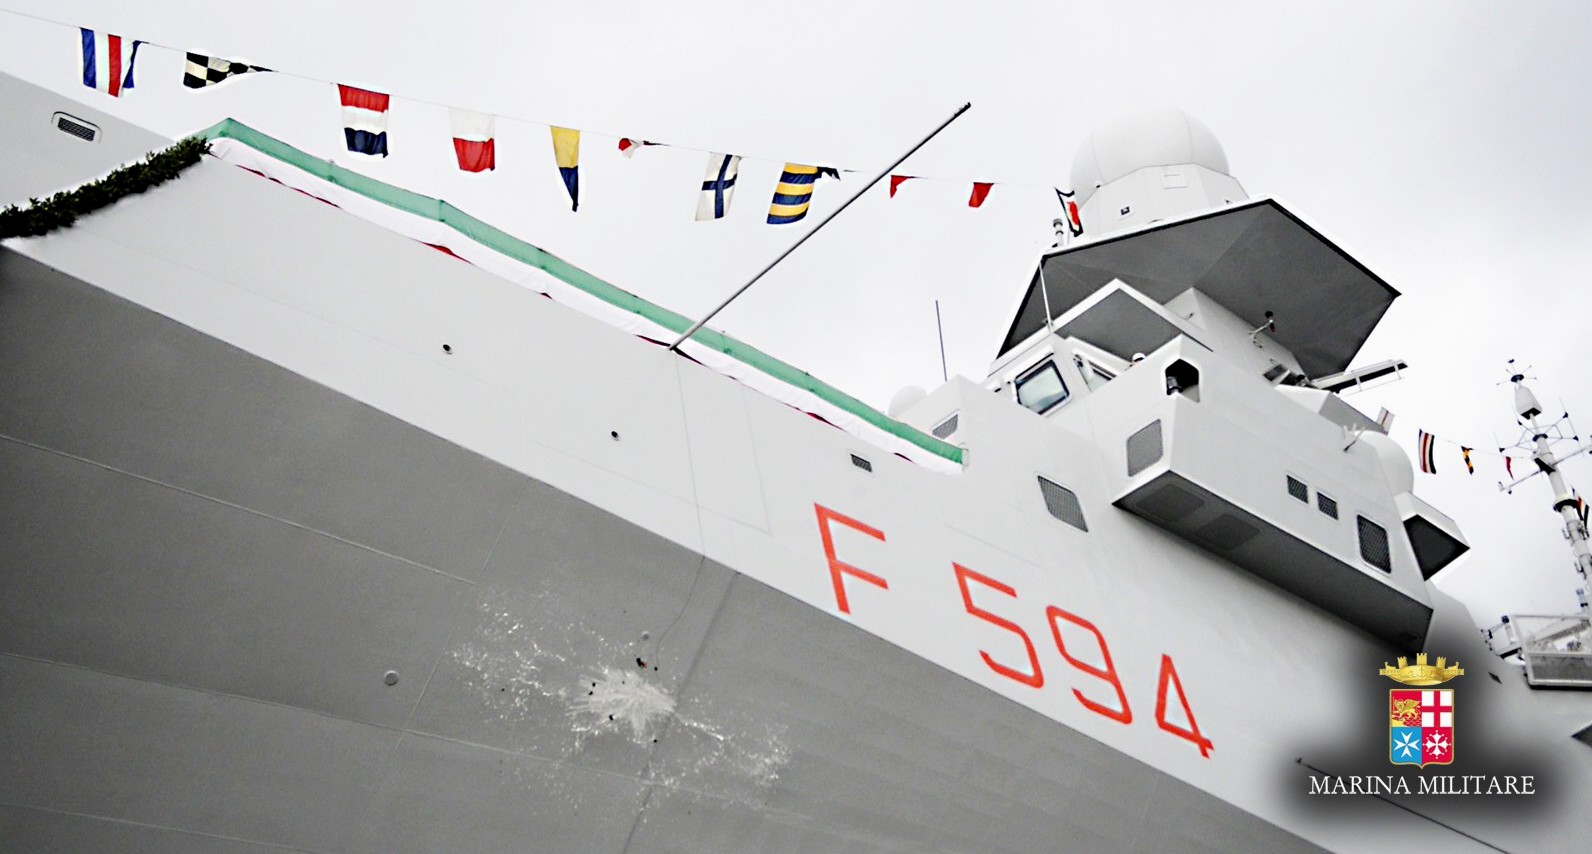 f-594 alpino its nave bergamini fremm class guided missile frigate italian navy marina militare 21 christening ceremony